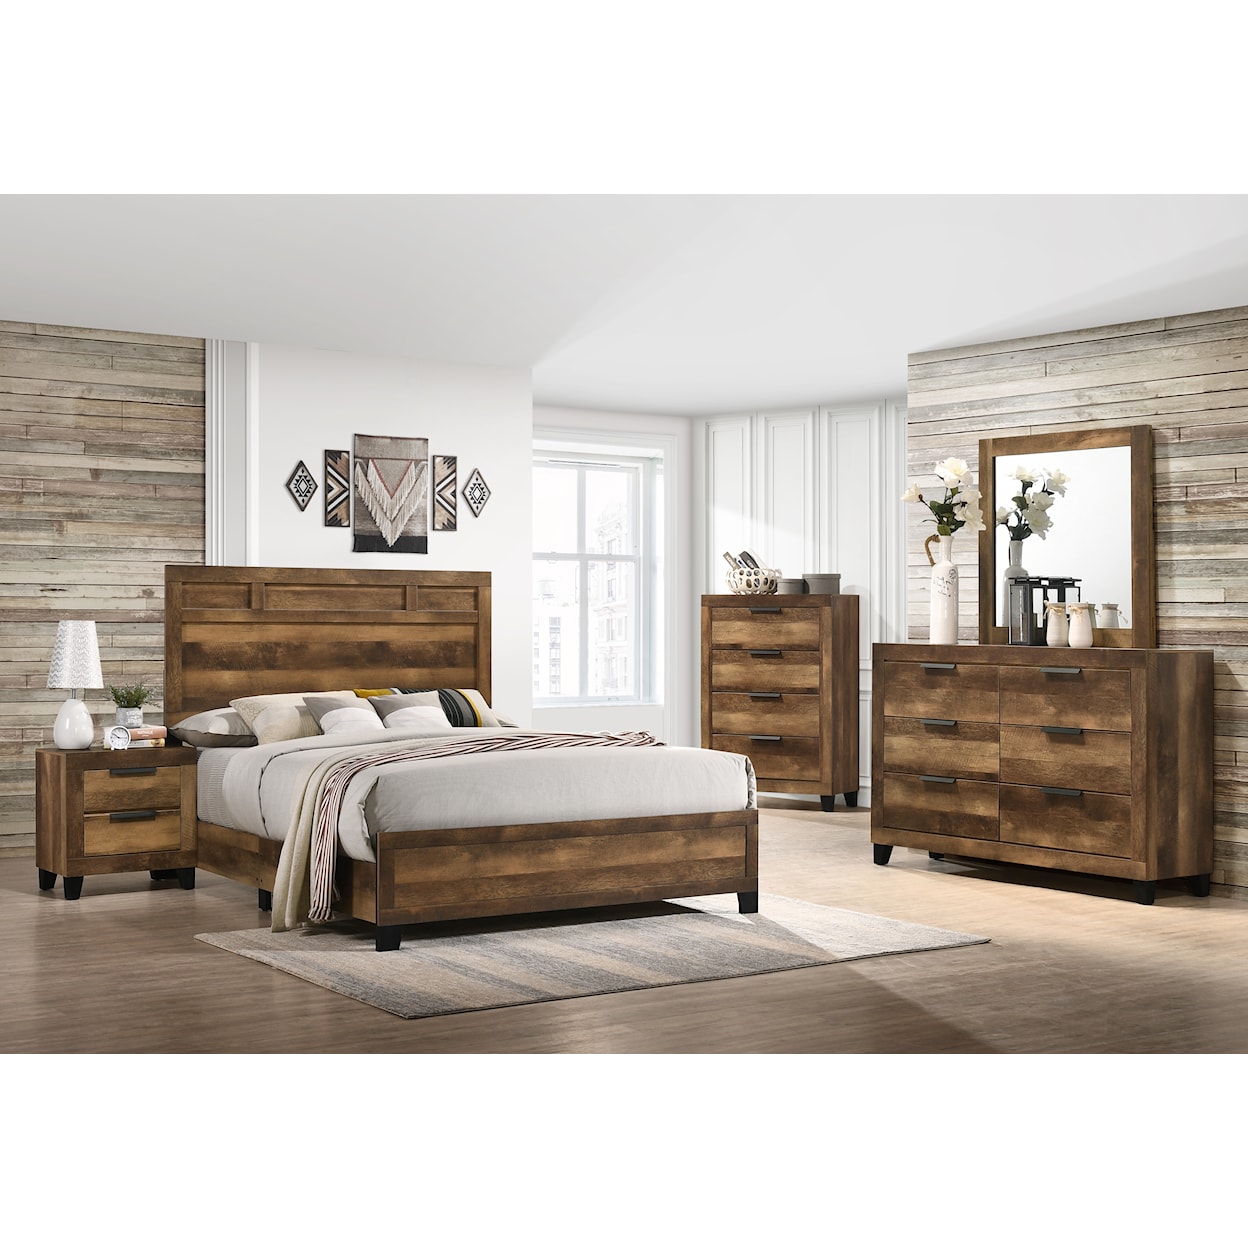 Acme Furniture Morales King Bed